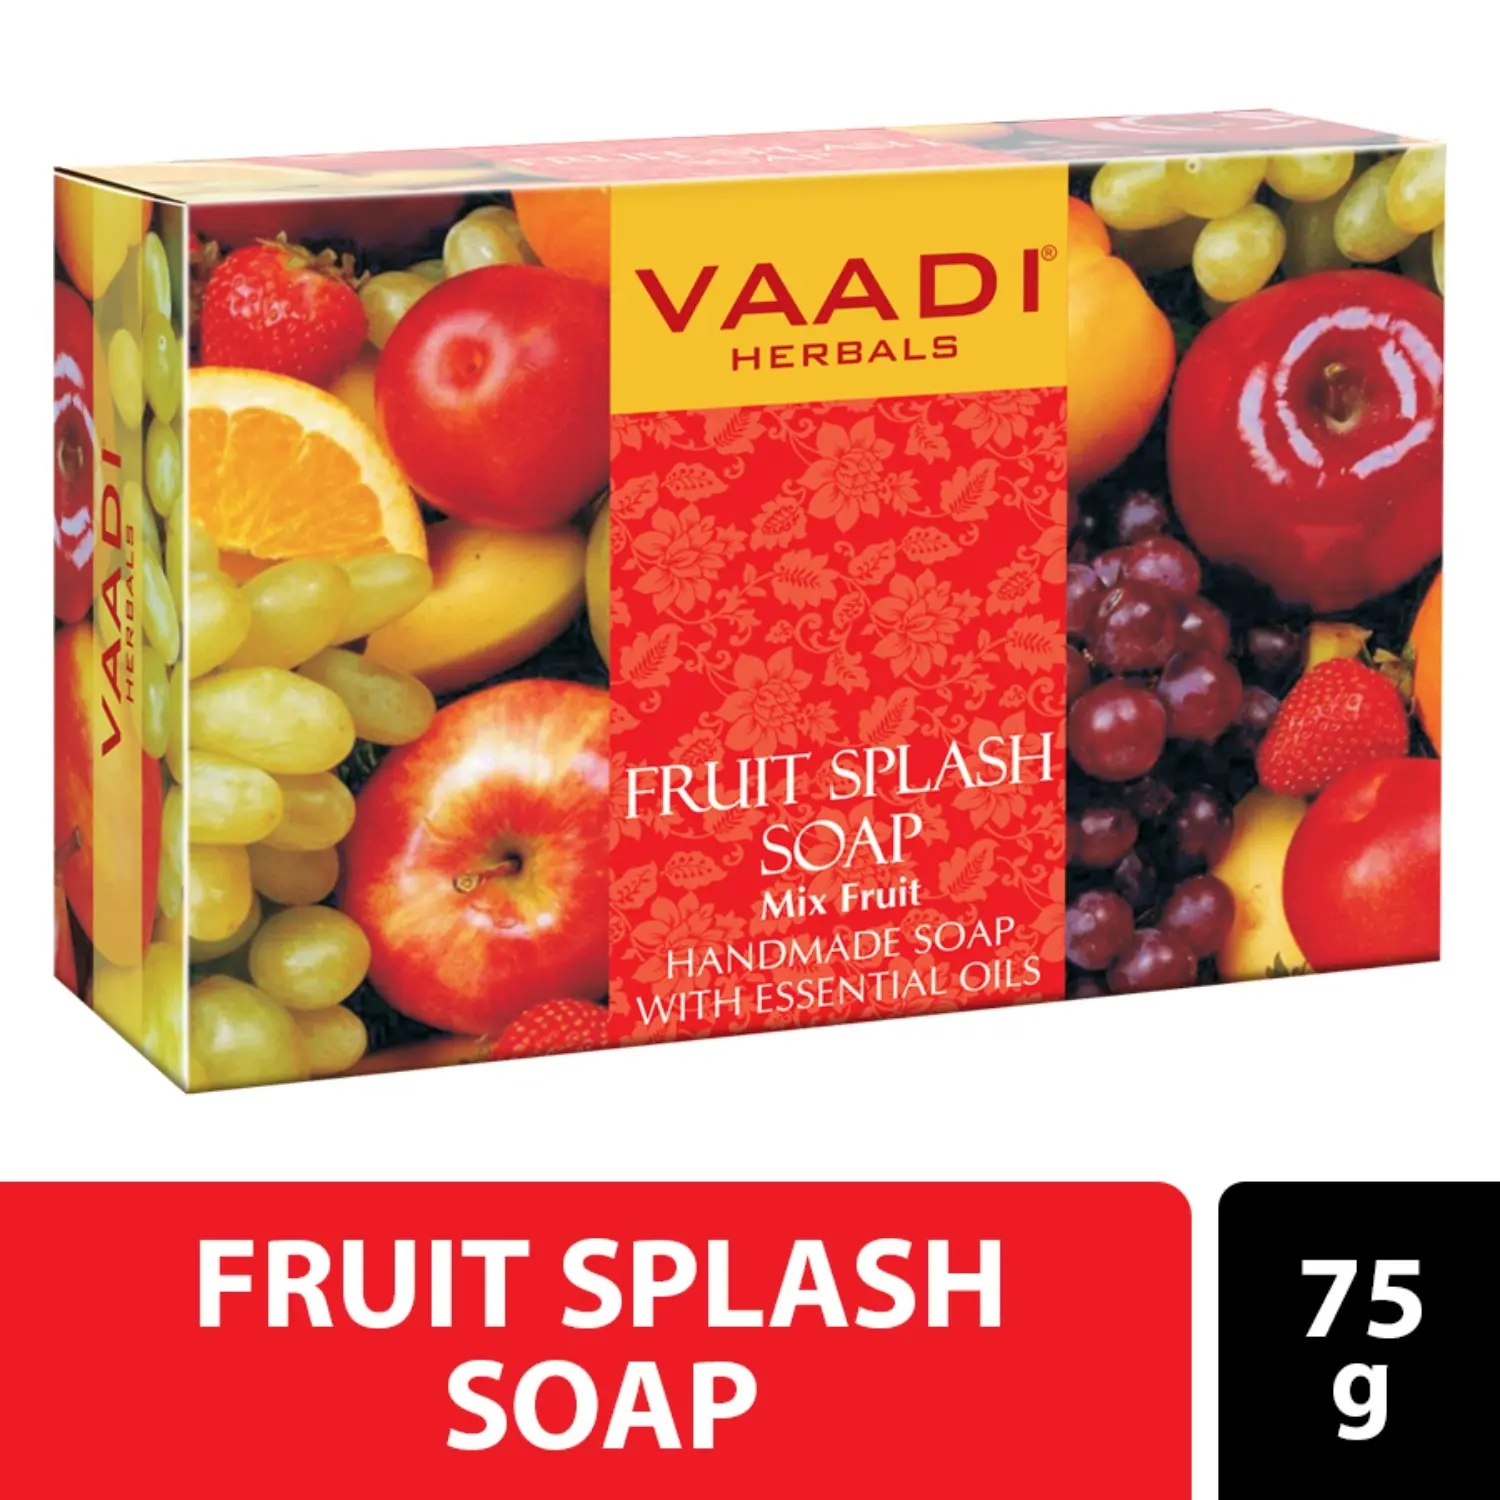 Vaadi Herbals Fruit Splash Soap (75g)